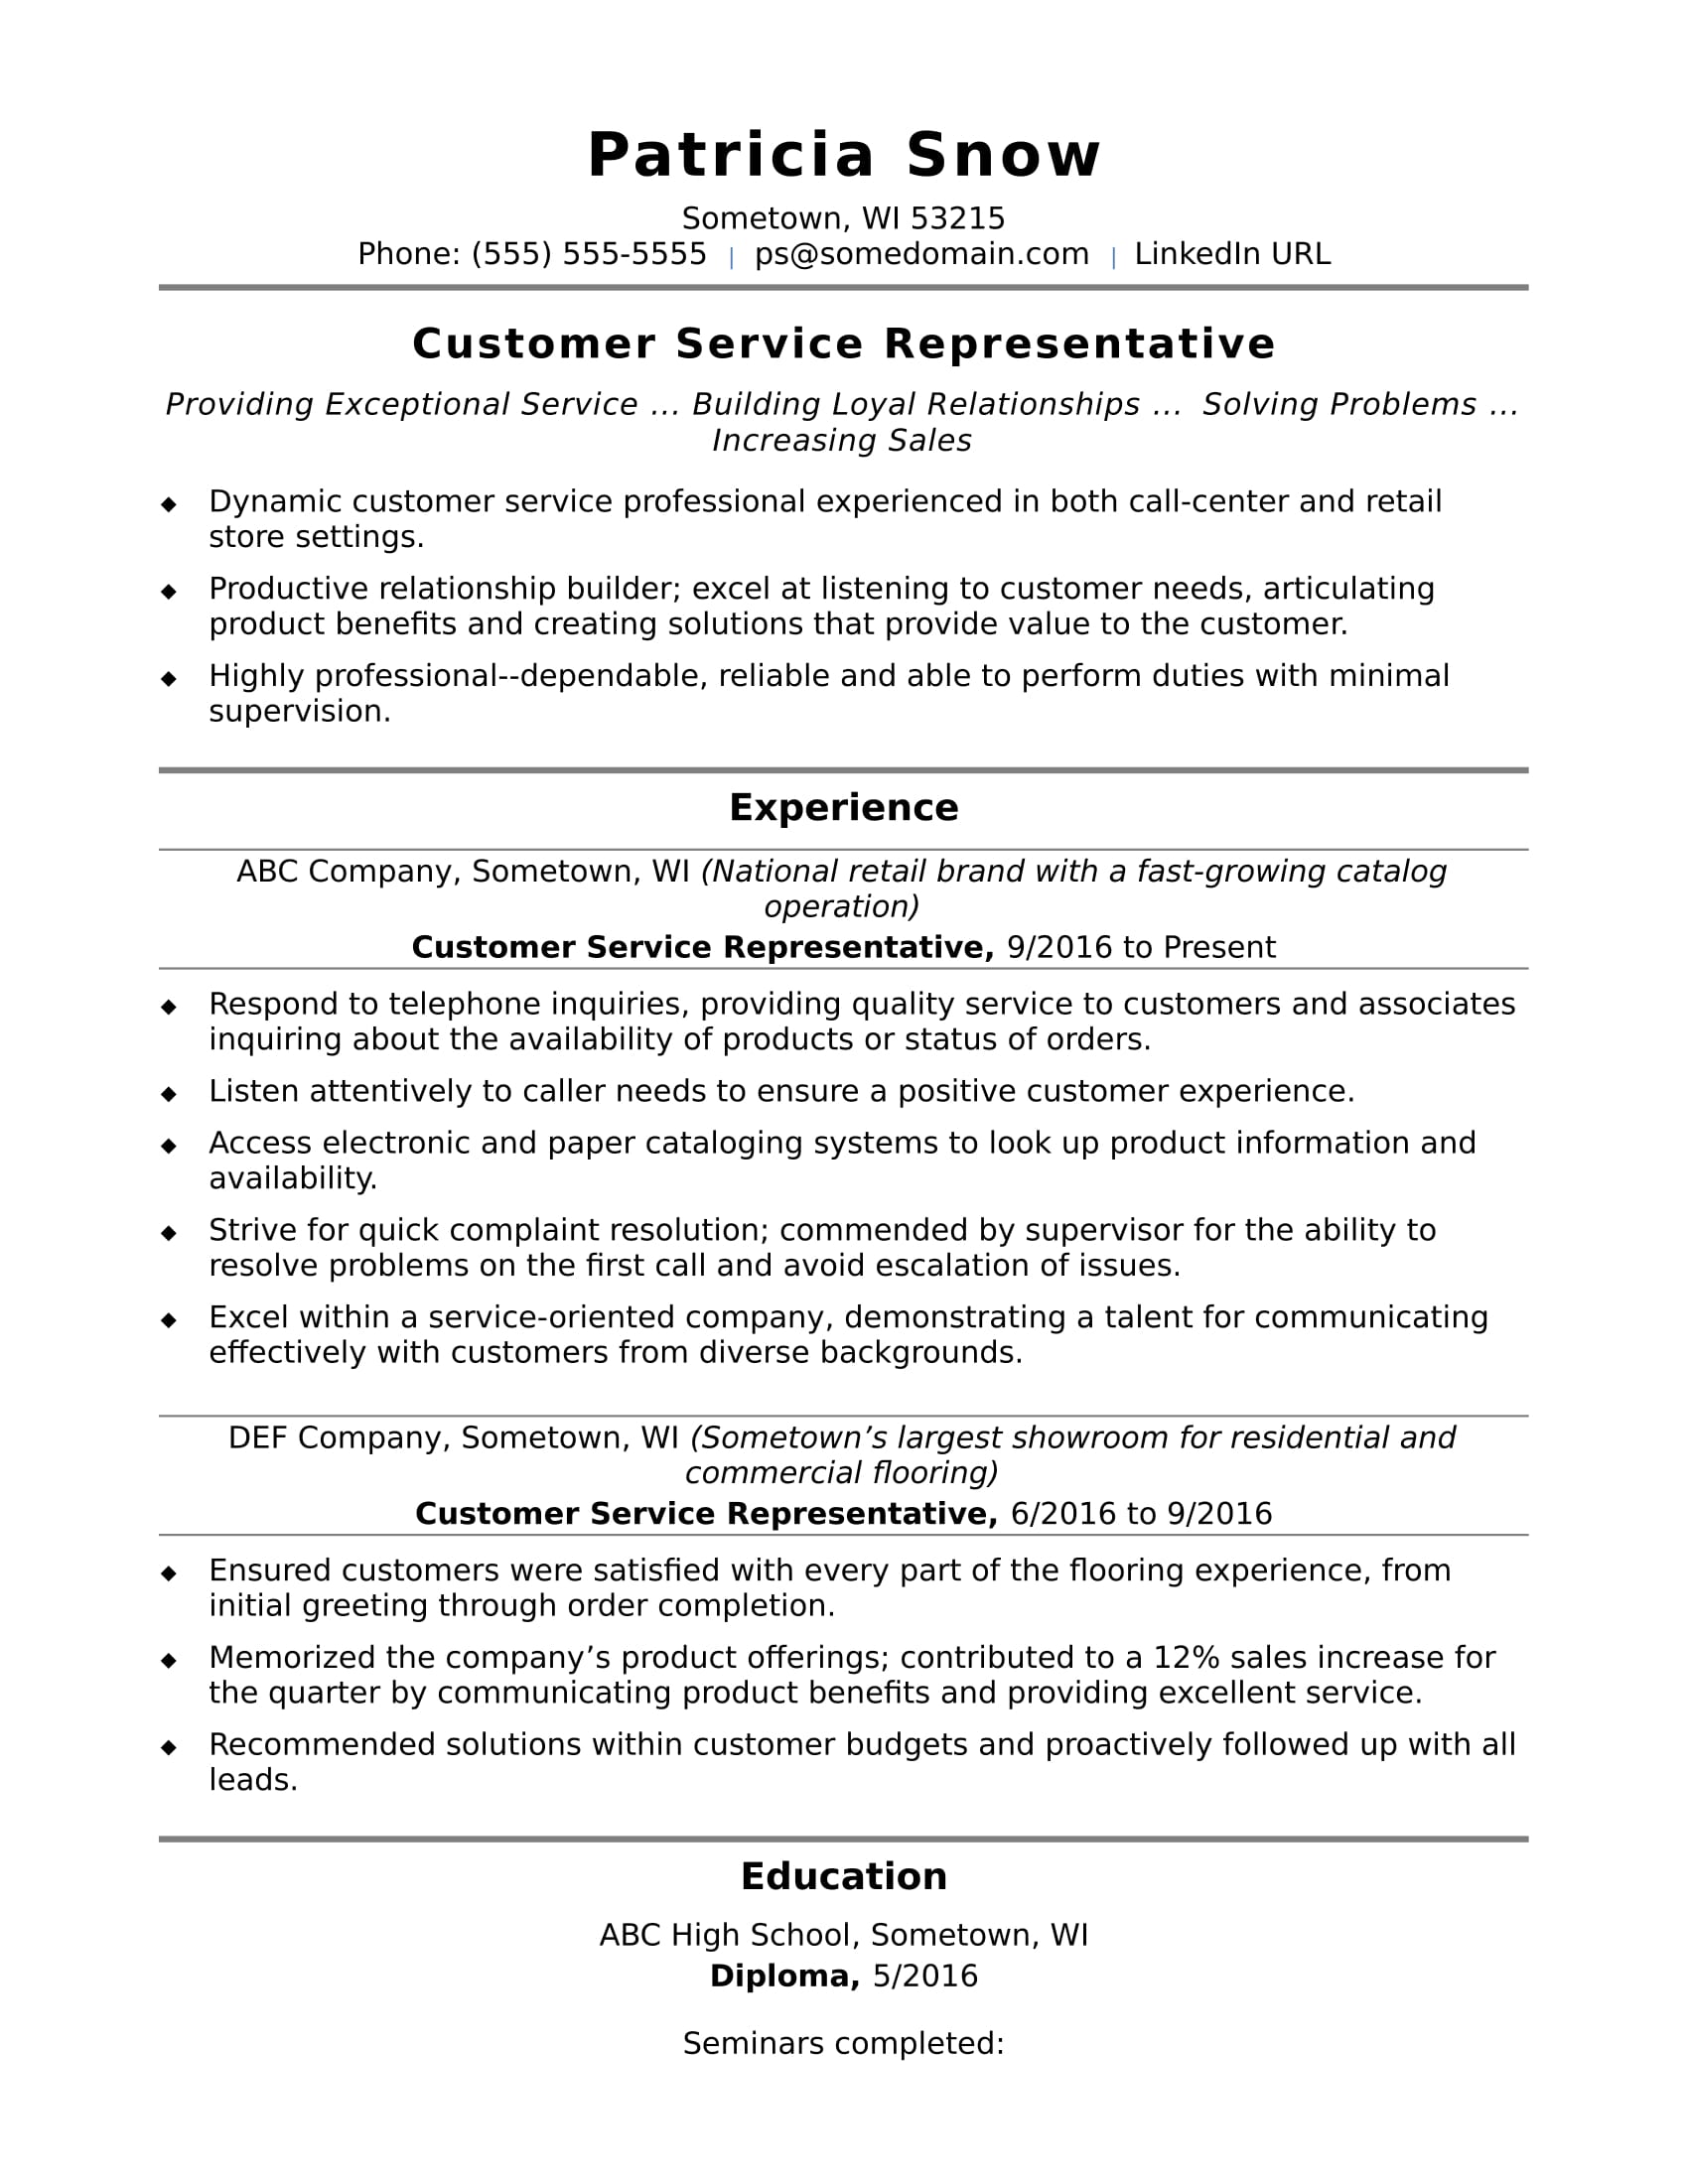 Resume For Customer Service Customer Service Representative Entry Level resume for customer service|wikiresume.com